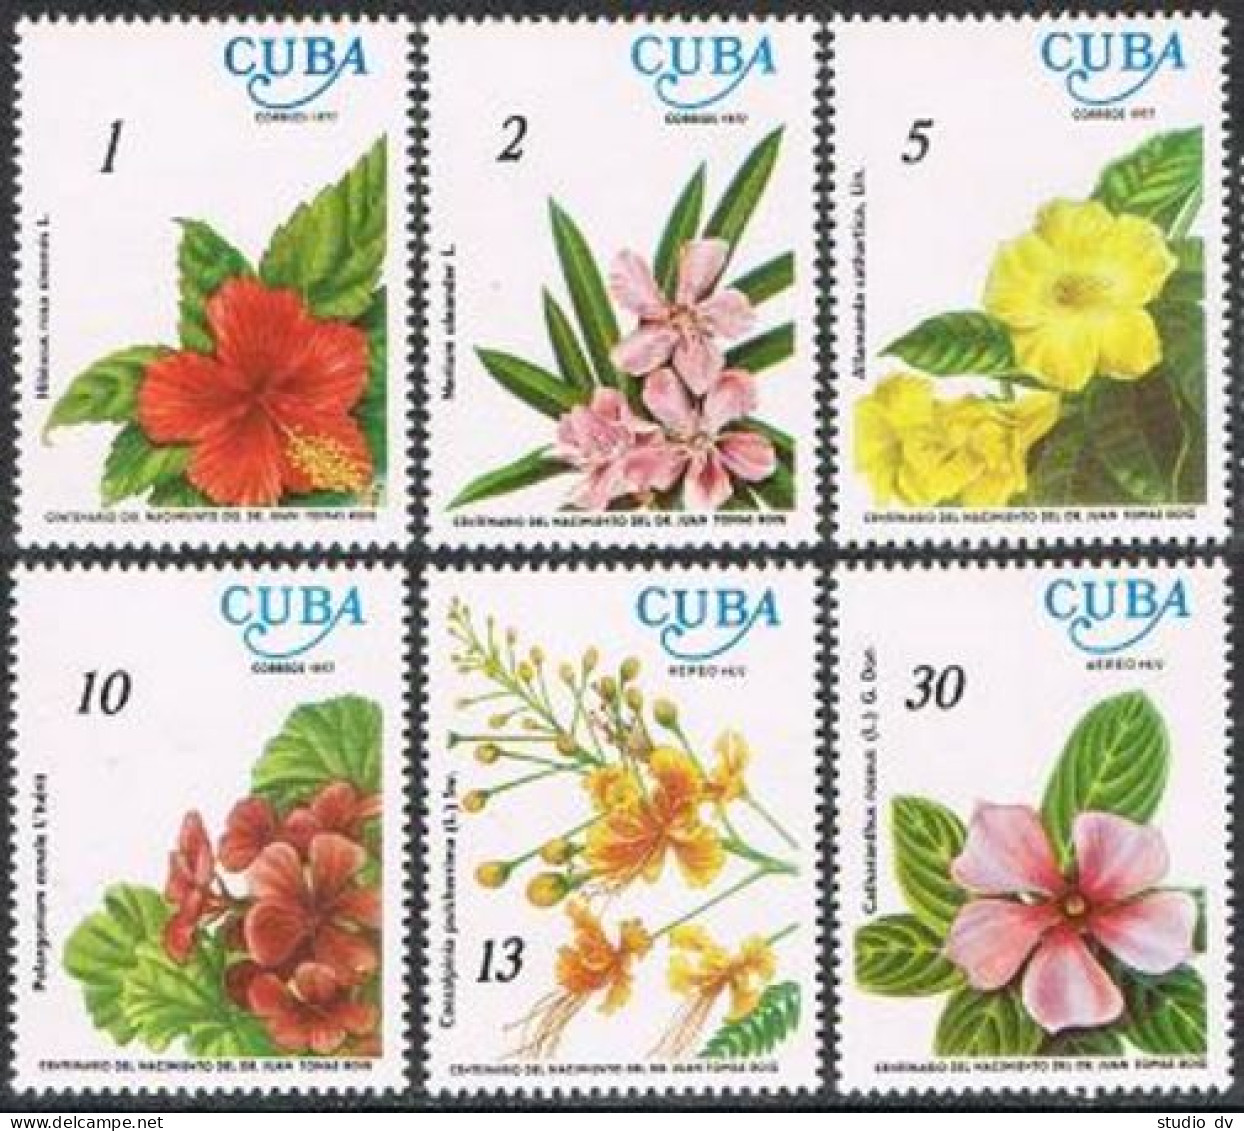 Cuba 2140-C253, C254, MNH.Mi 2217-2222, Bl.51. Dr Tomas Roig, Botanist. Flowers. - Nuevos